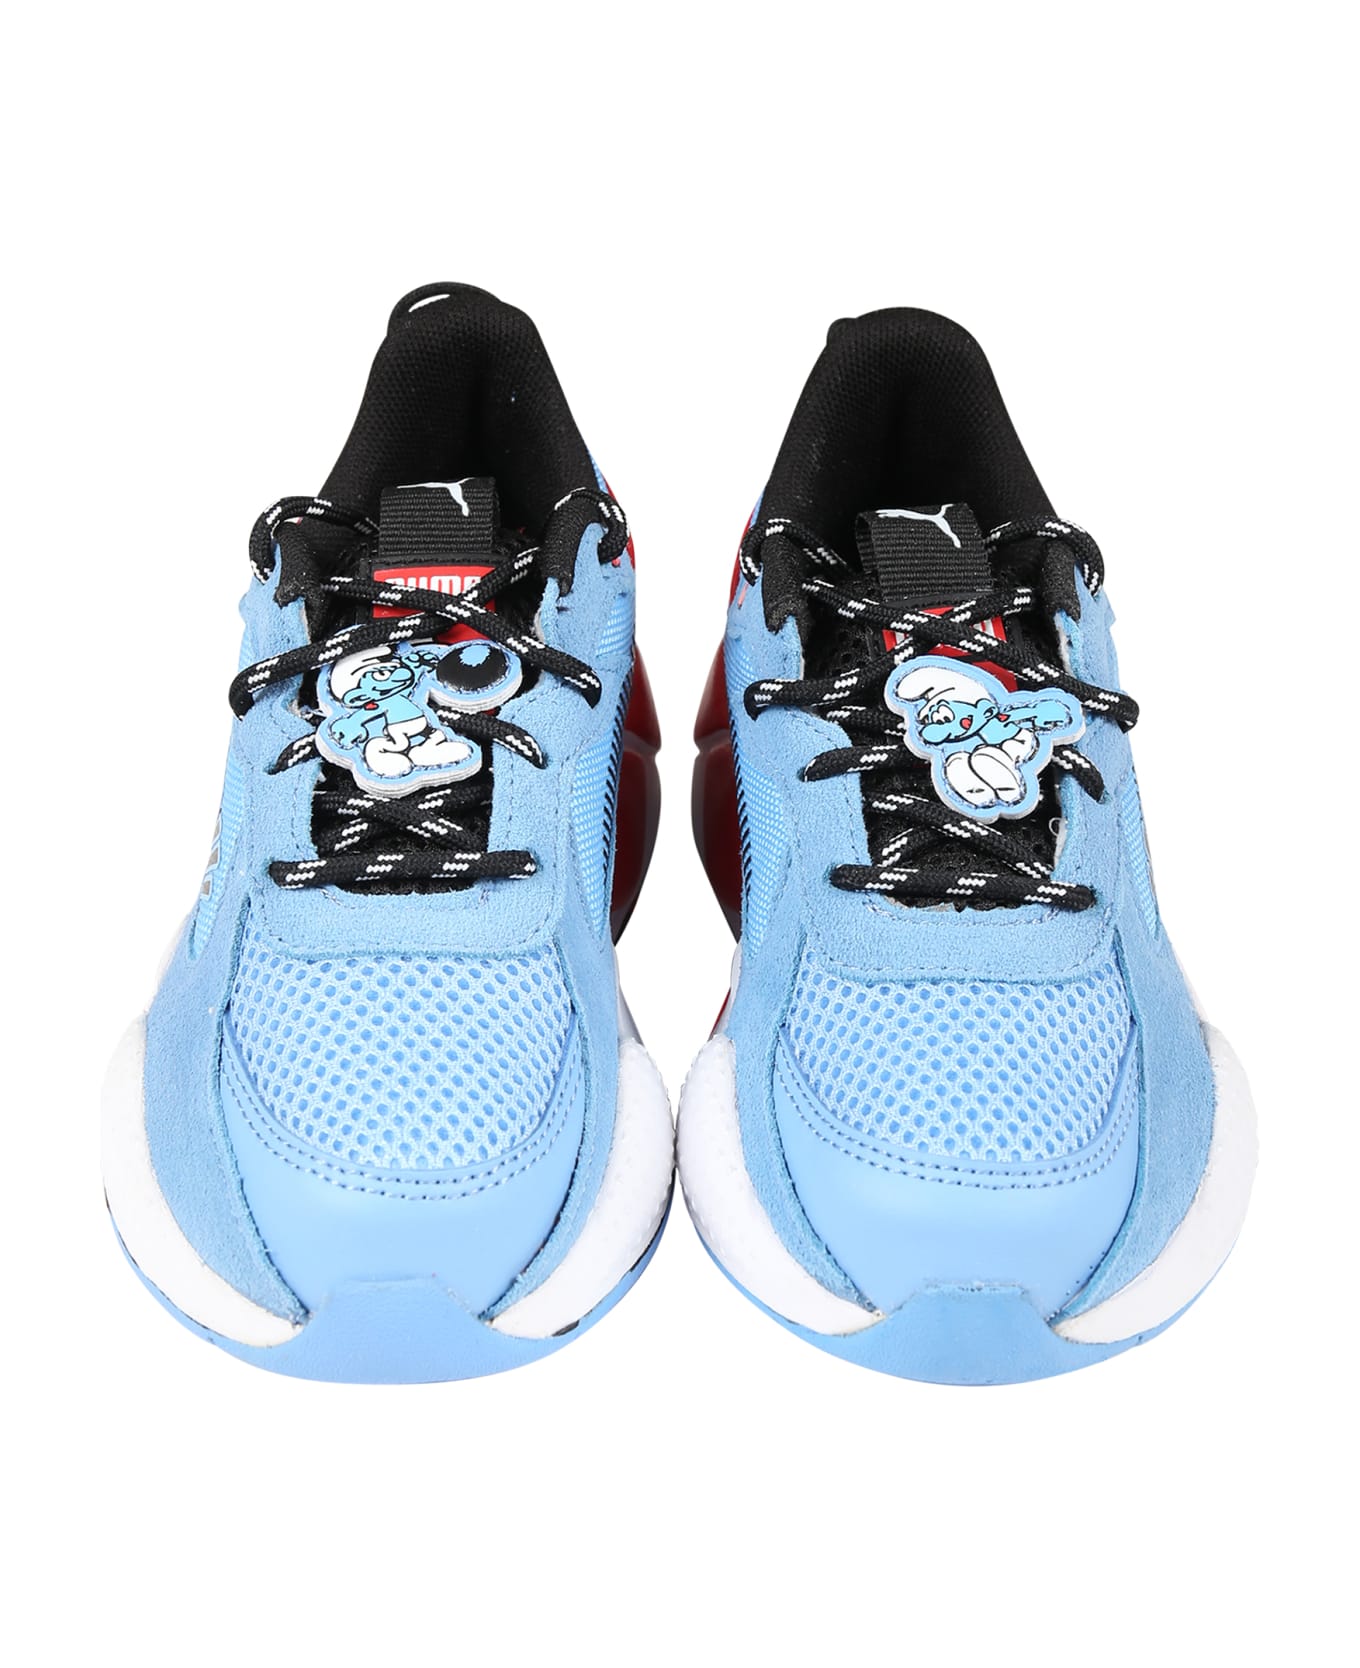 Puma Light Blue Rs-x The Smurfs Ps Sneakers For Boy - Light Blue シューズ